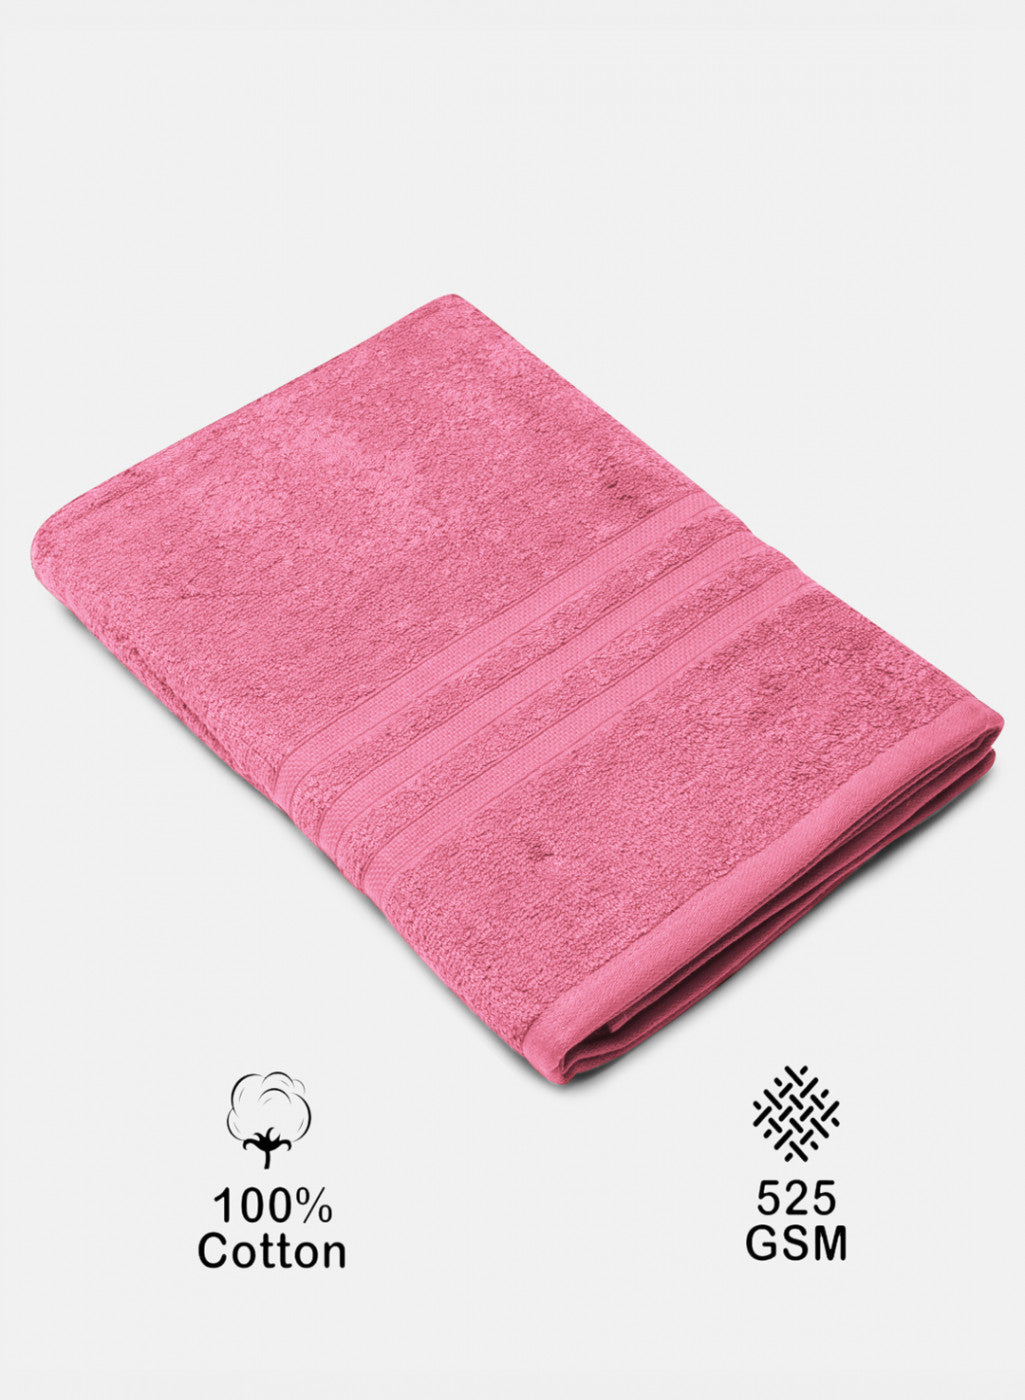 Pink Cotton 525 GSM Bath Towel